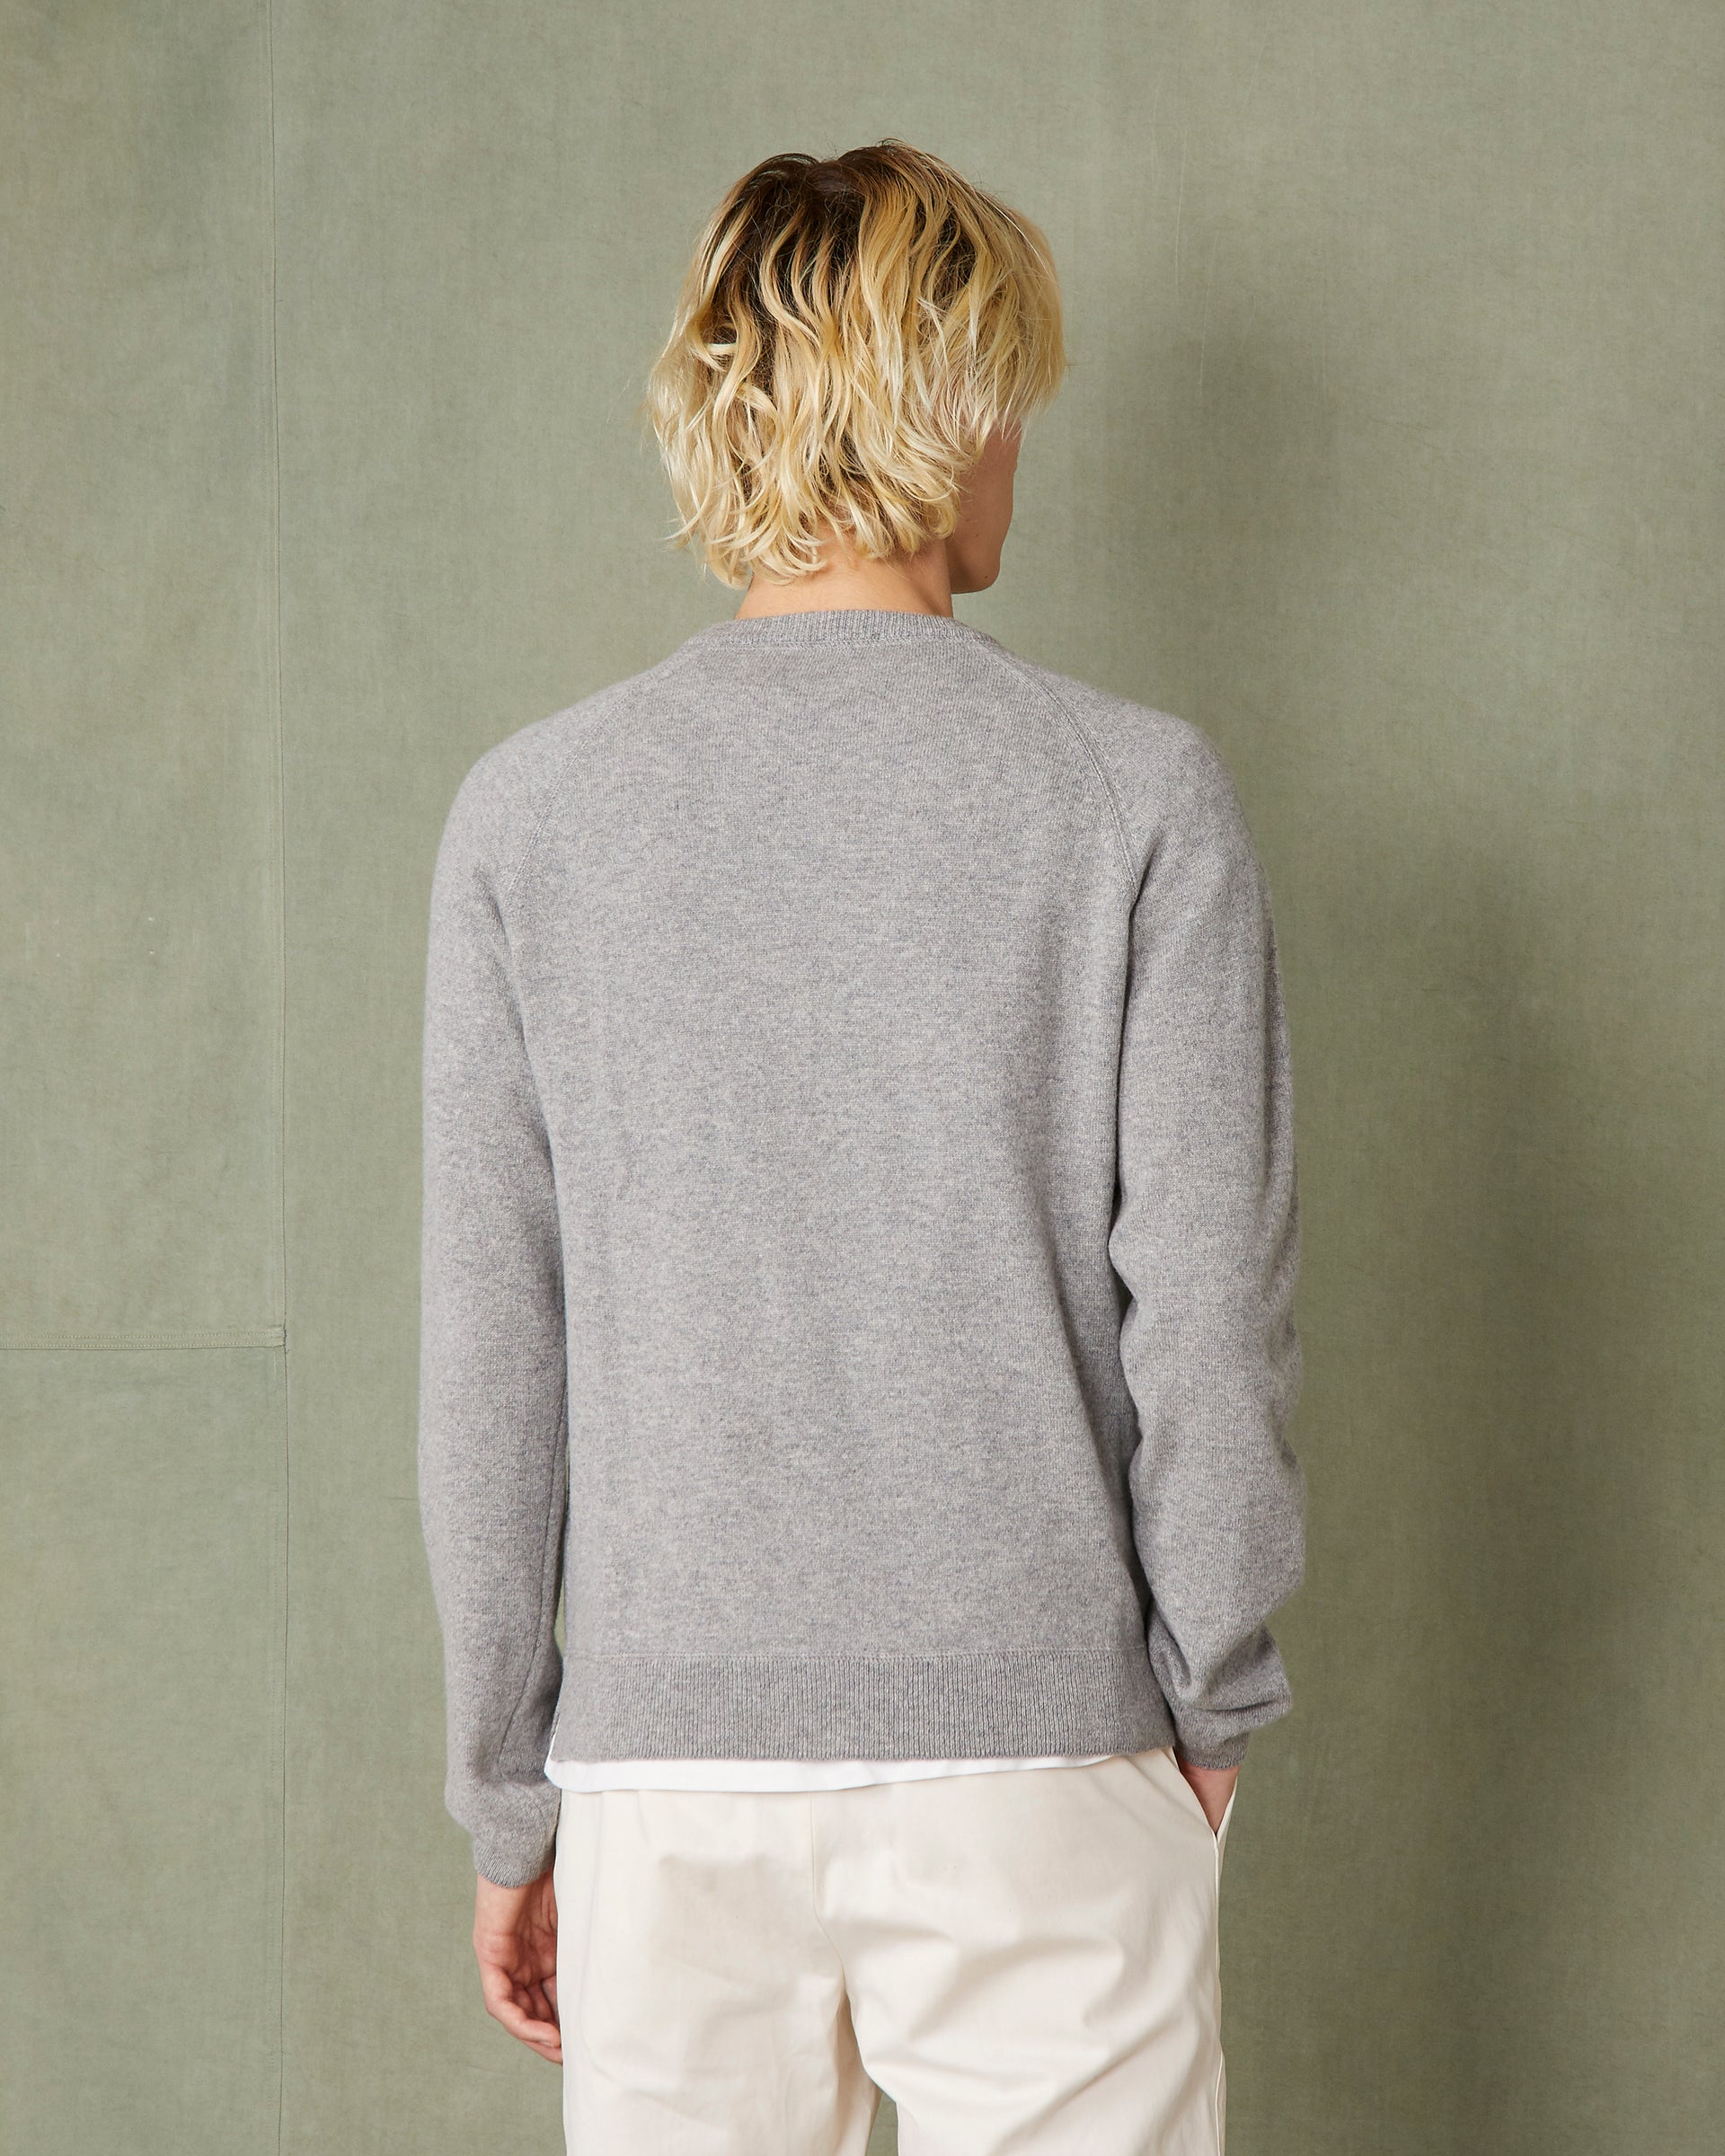 Nate sweater - Image 4